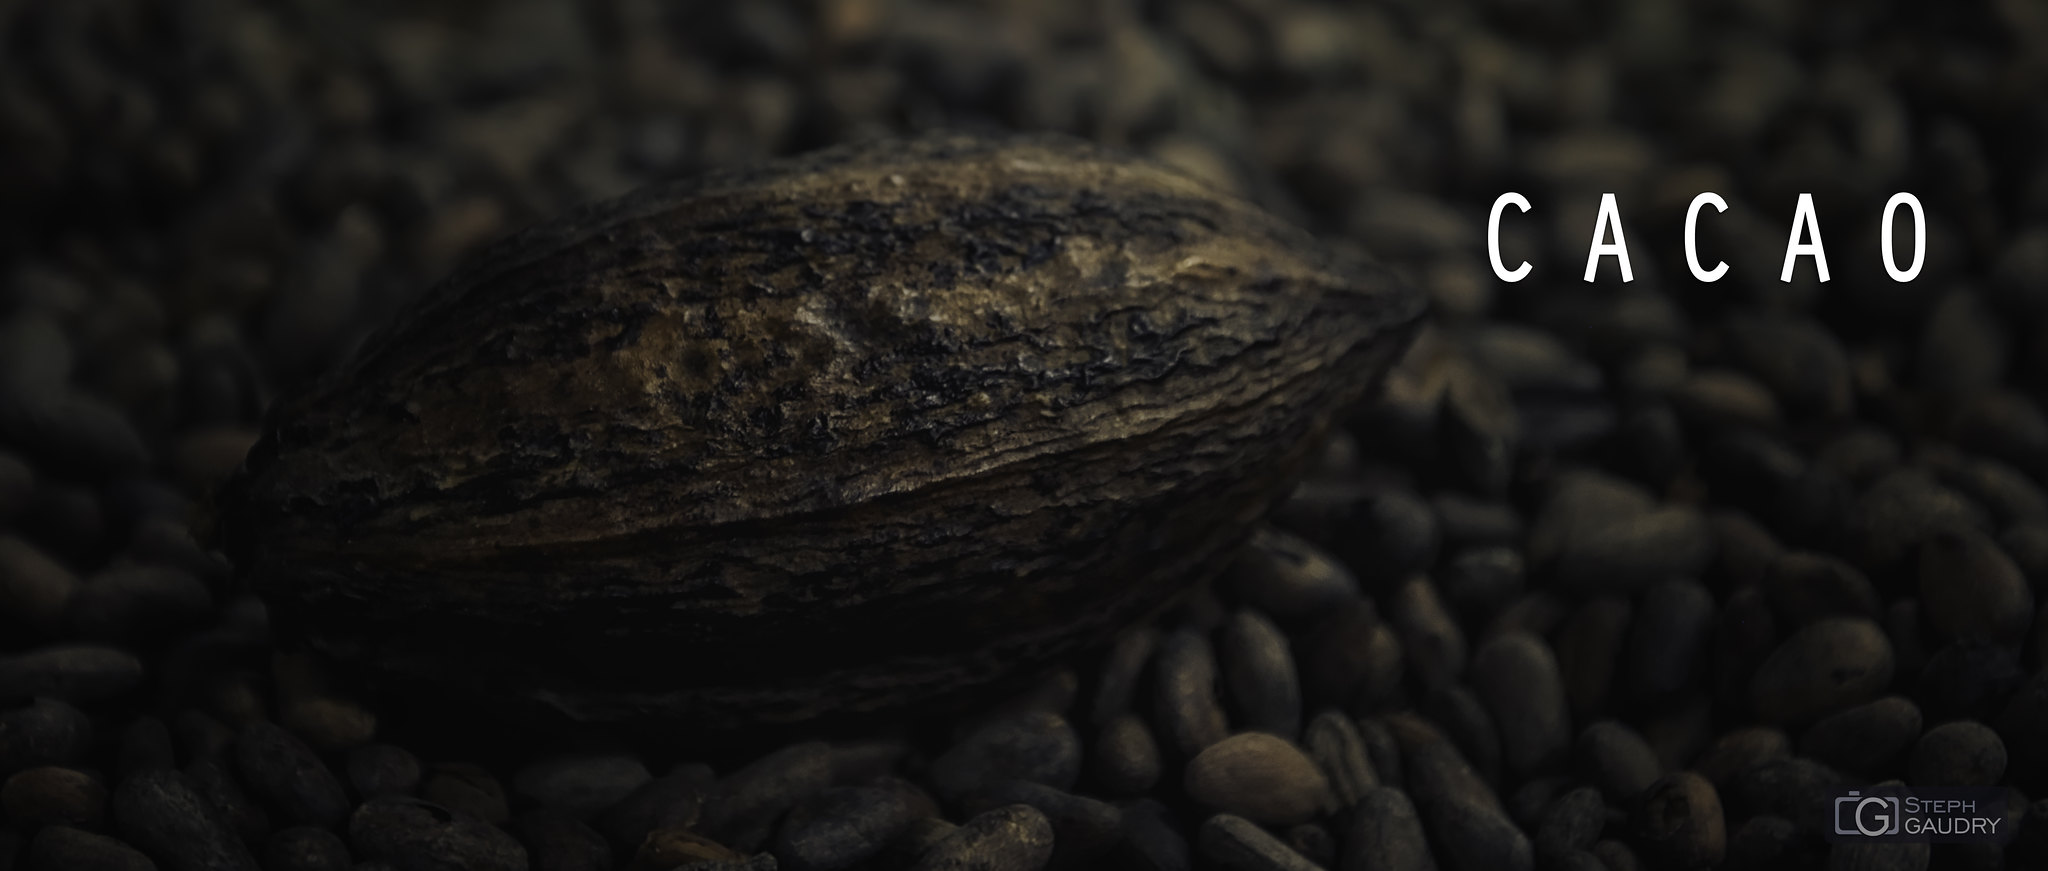 Cacao [Click to start slideshow]